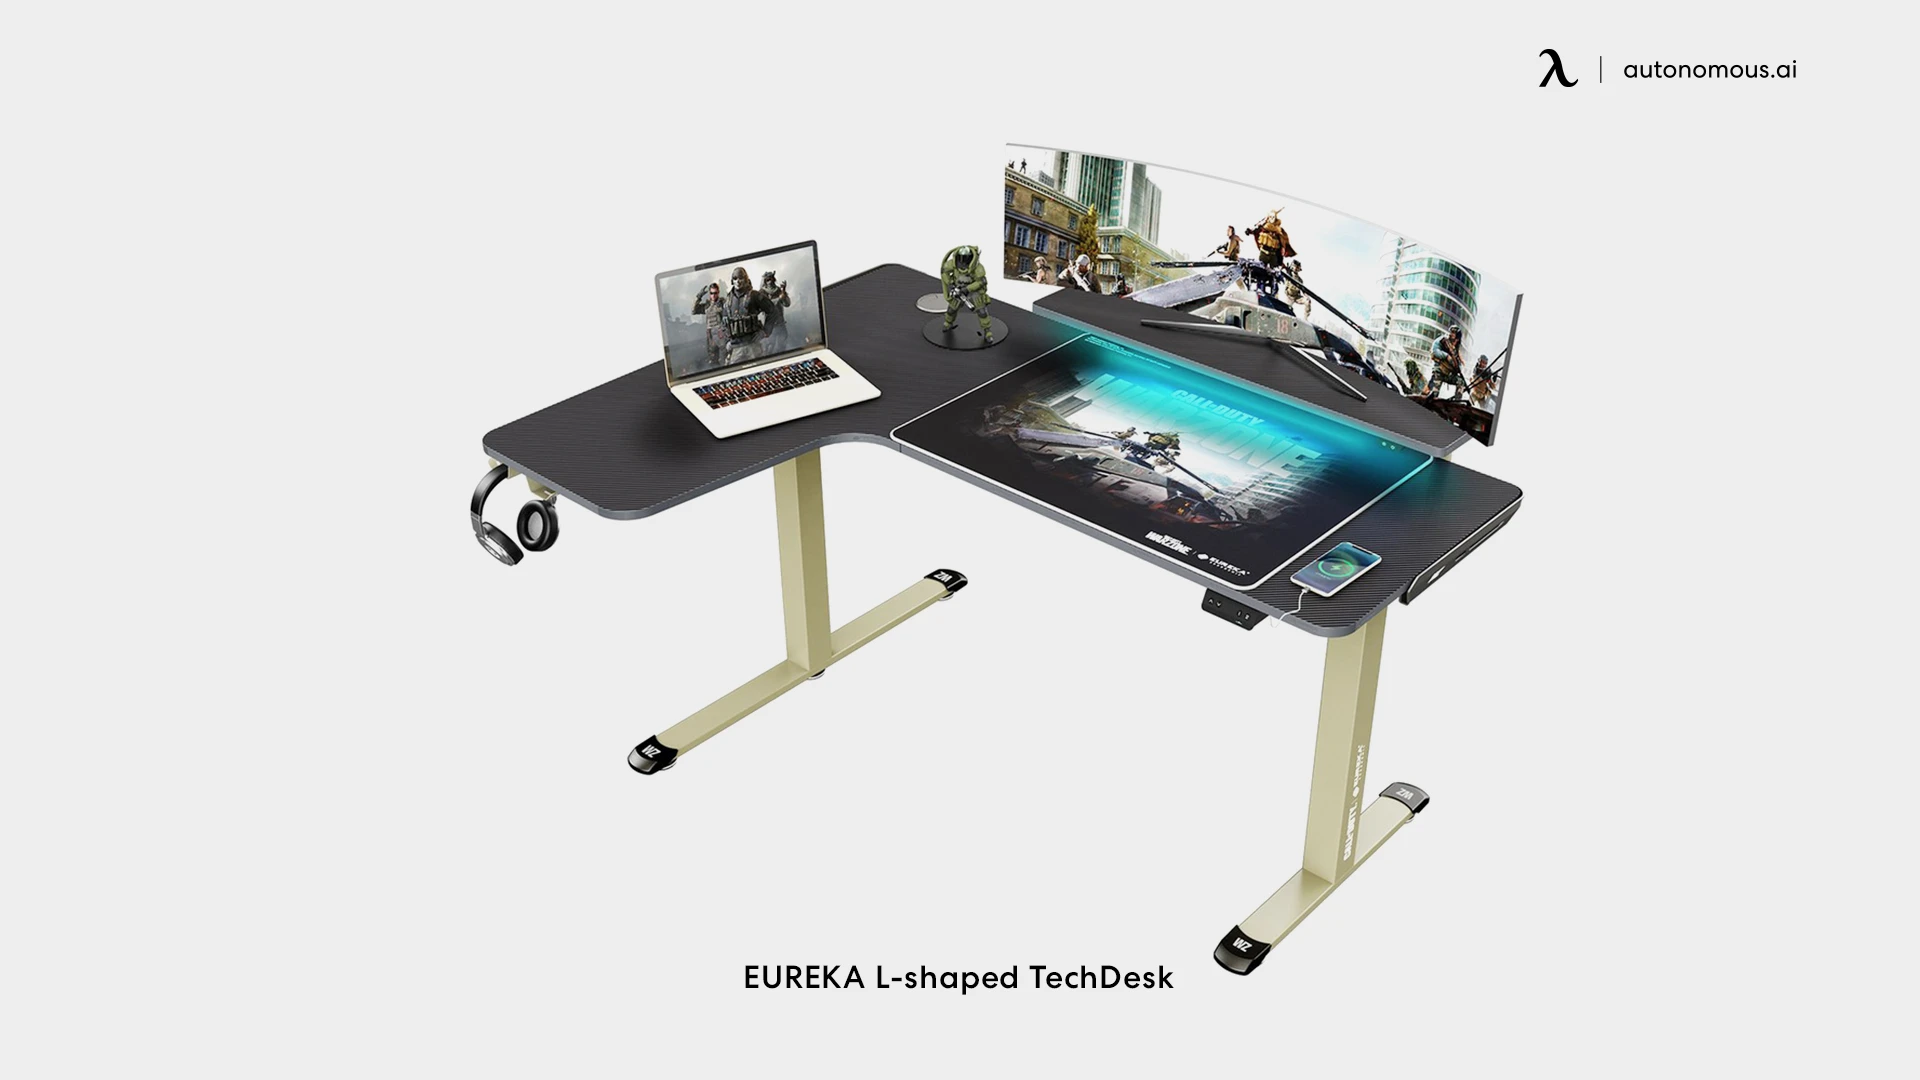 Eureka L-shaped TechDesk: Monitor Stand & Dual Headphone Hook